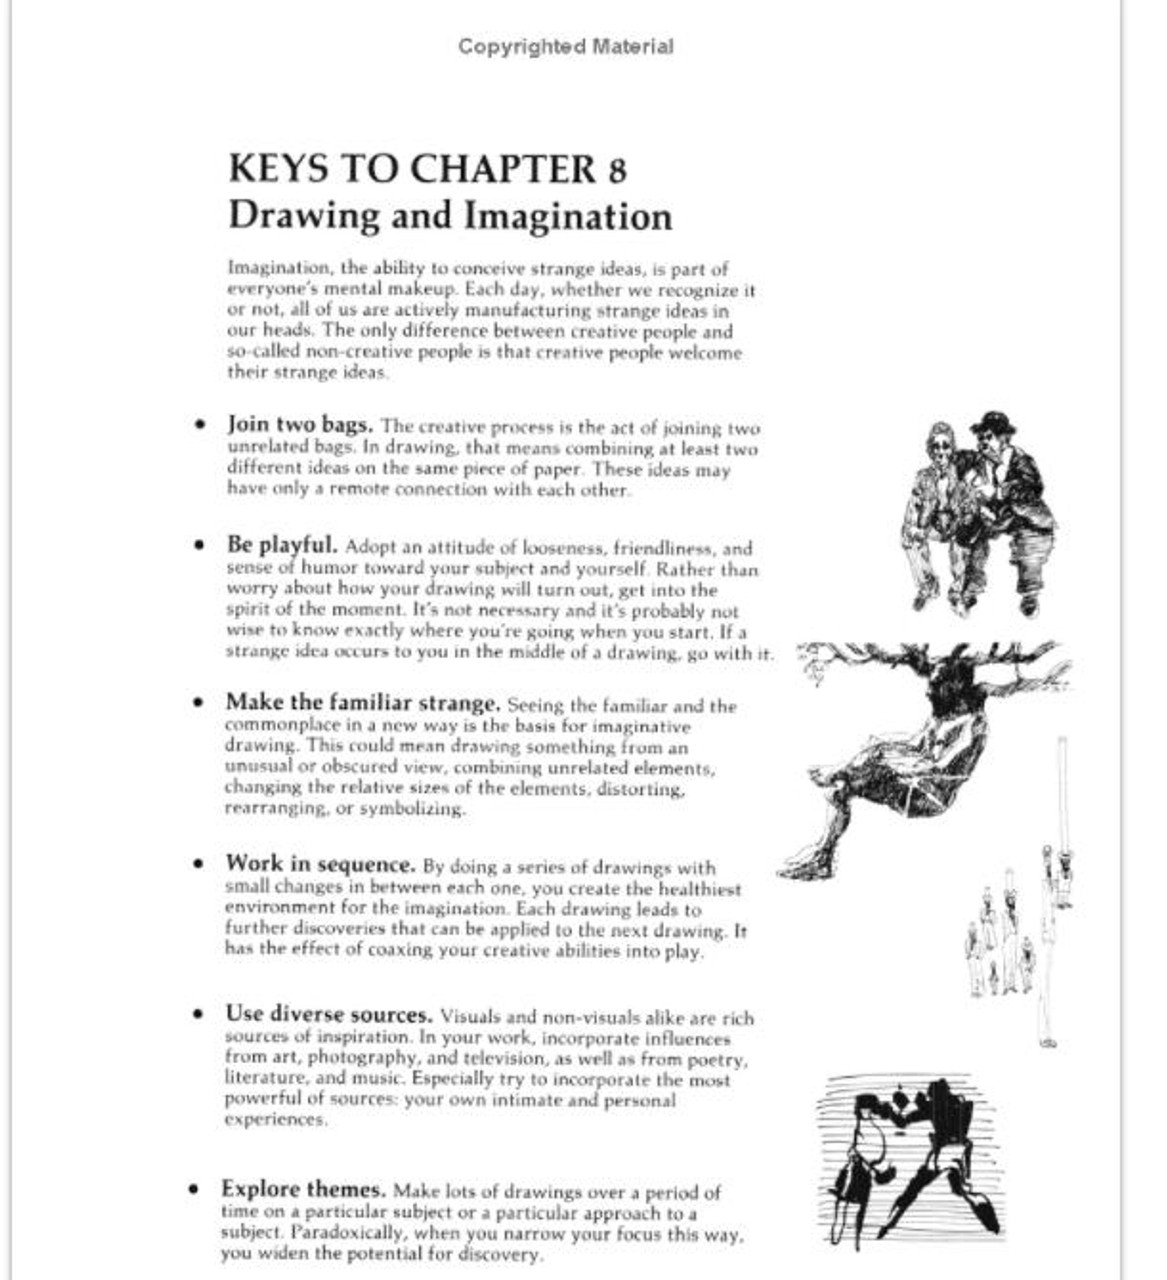 Keys to Drawing - Bert Dodson, 興趣及遊戲, 書本& 文具, 教科書- Carousell